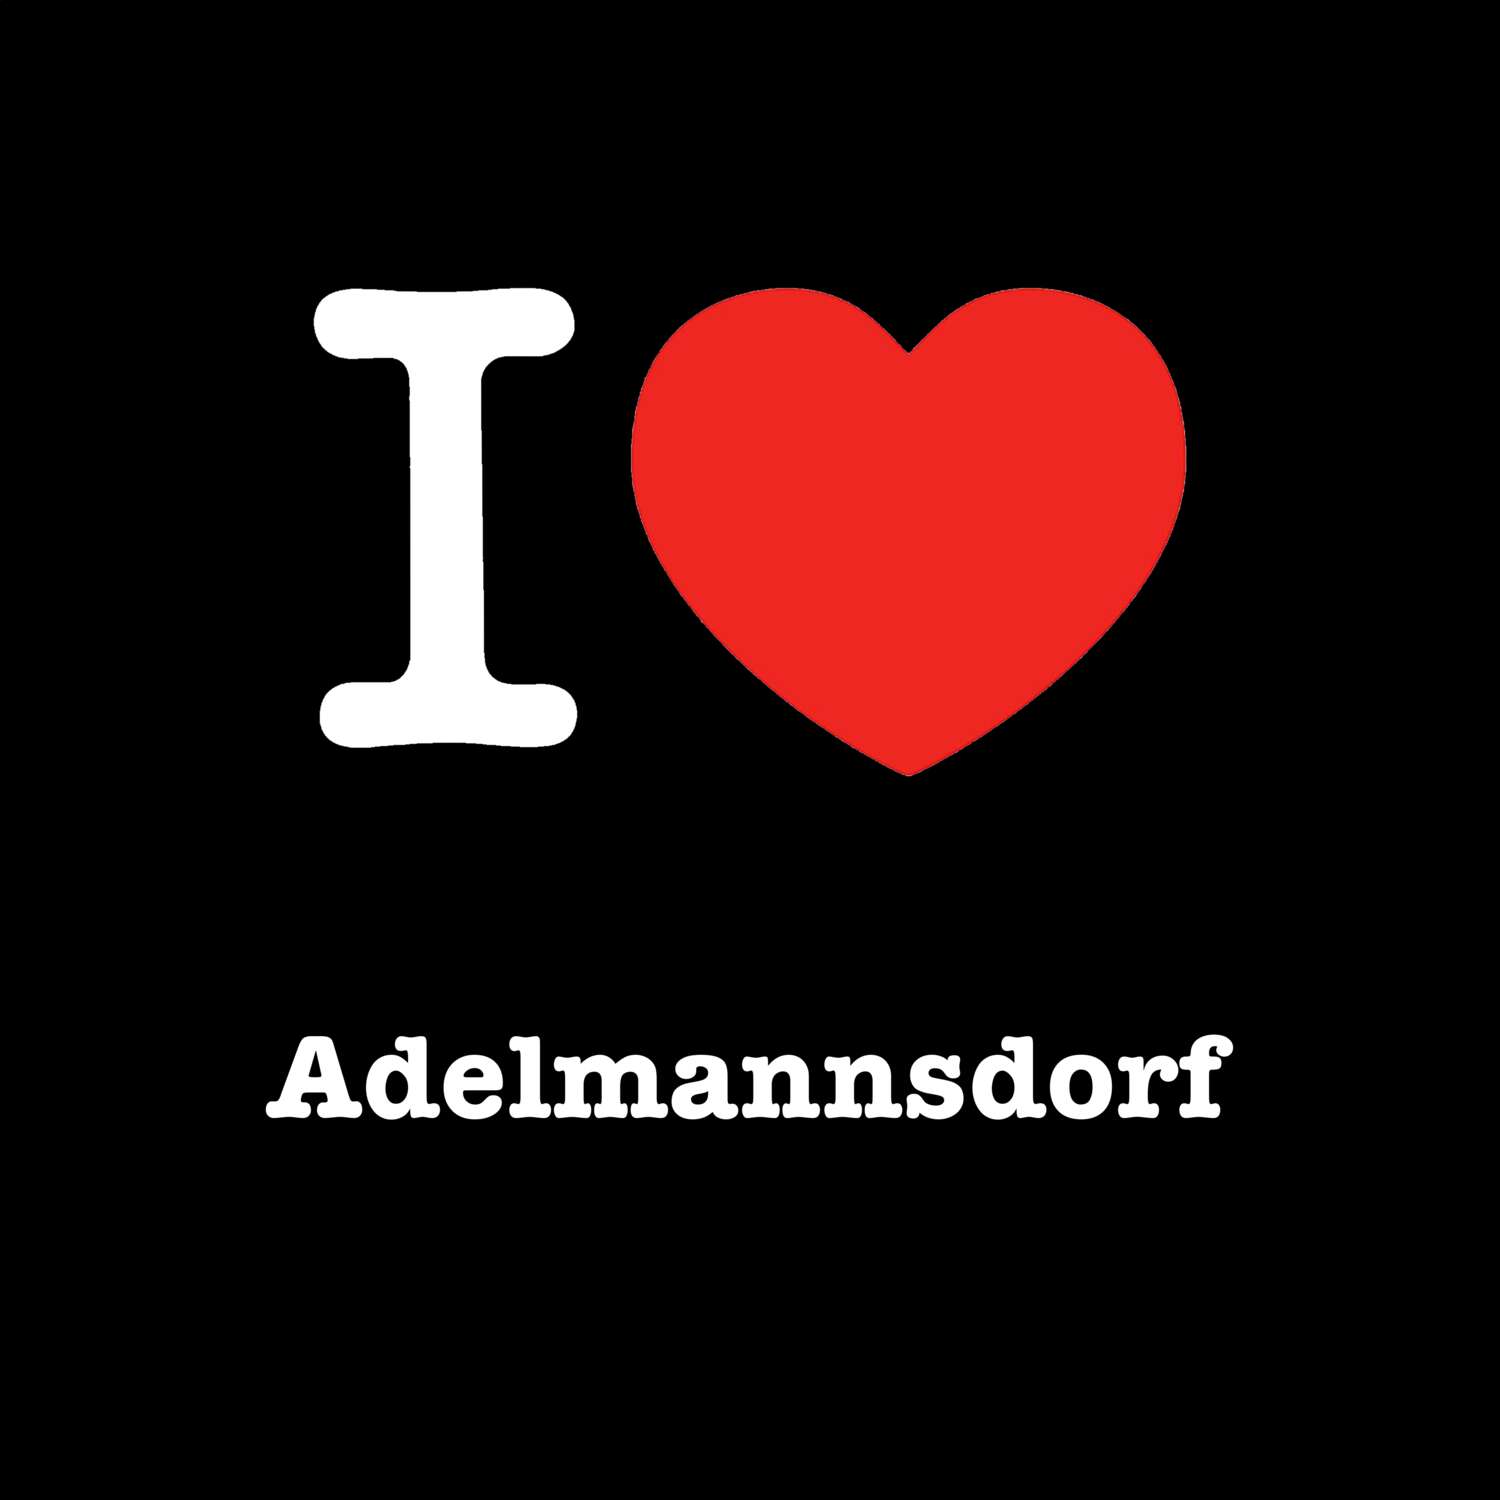 Adelmannsdorf T-Shirt »I love«